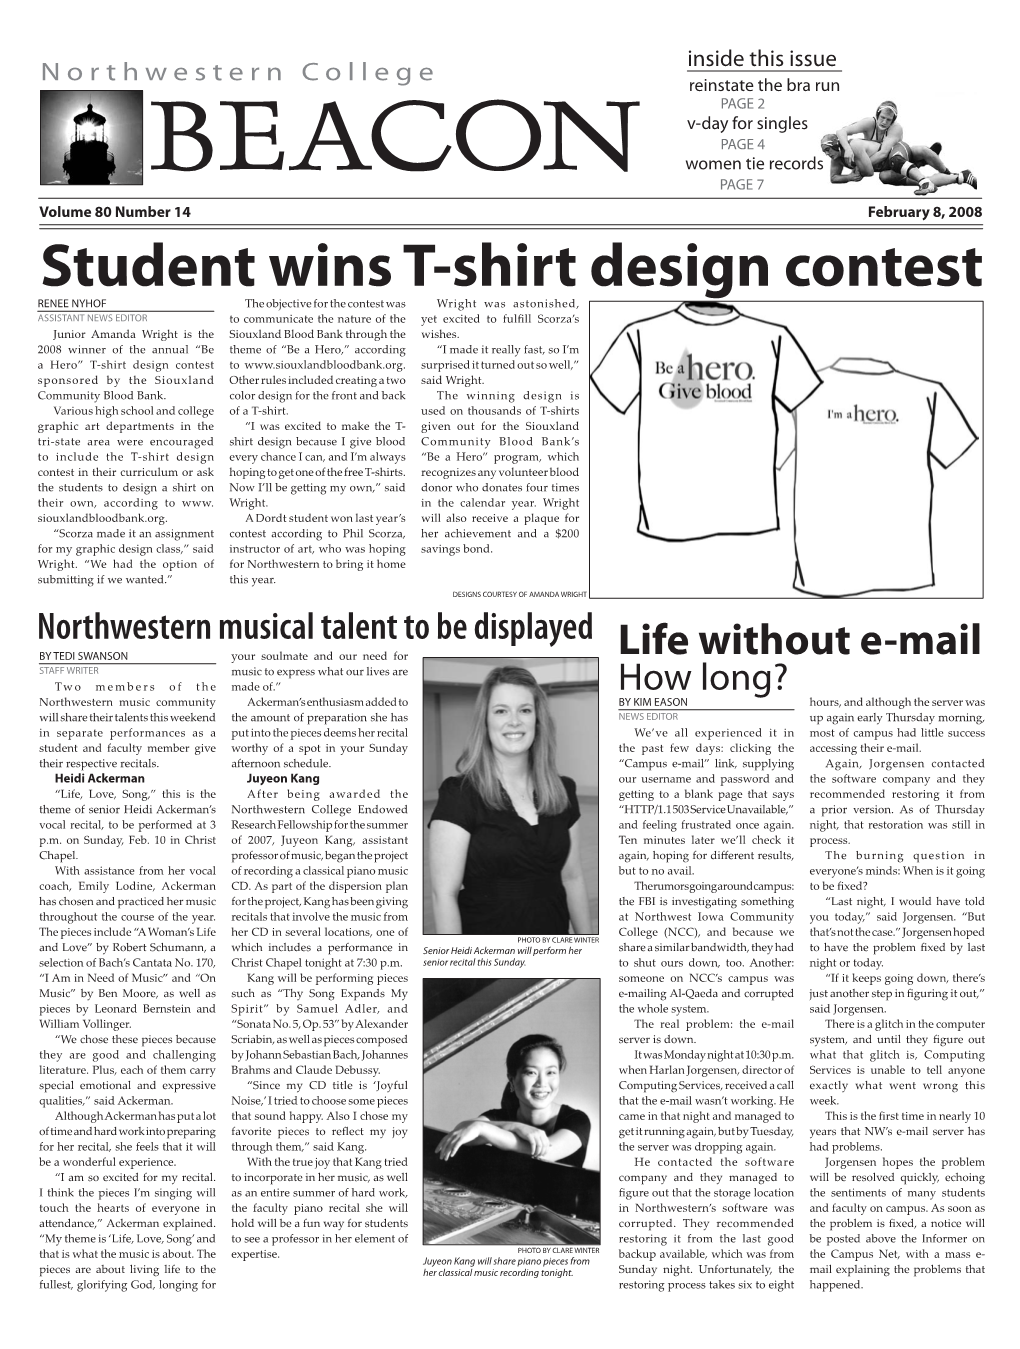 Student Wins T-Shirt Design Contest